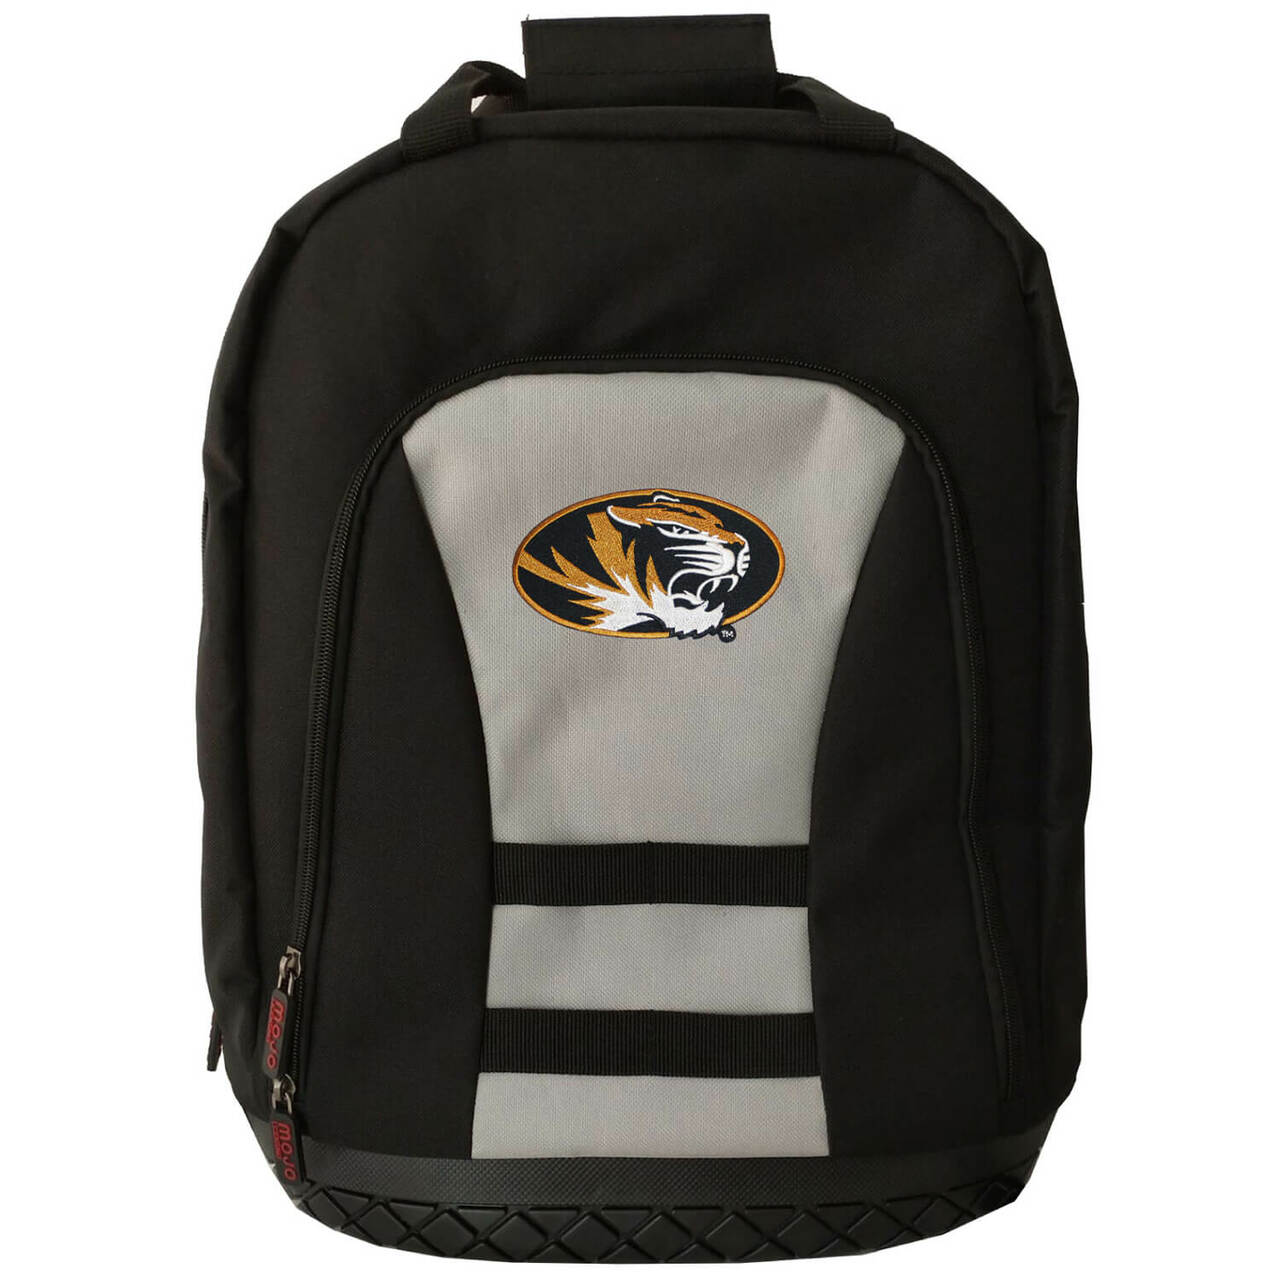 Missouri Tigers Tool Bag Backpack